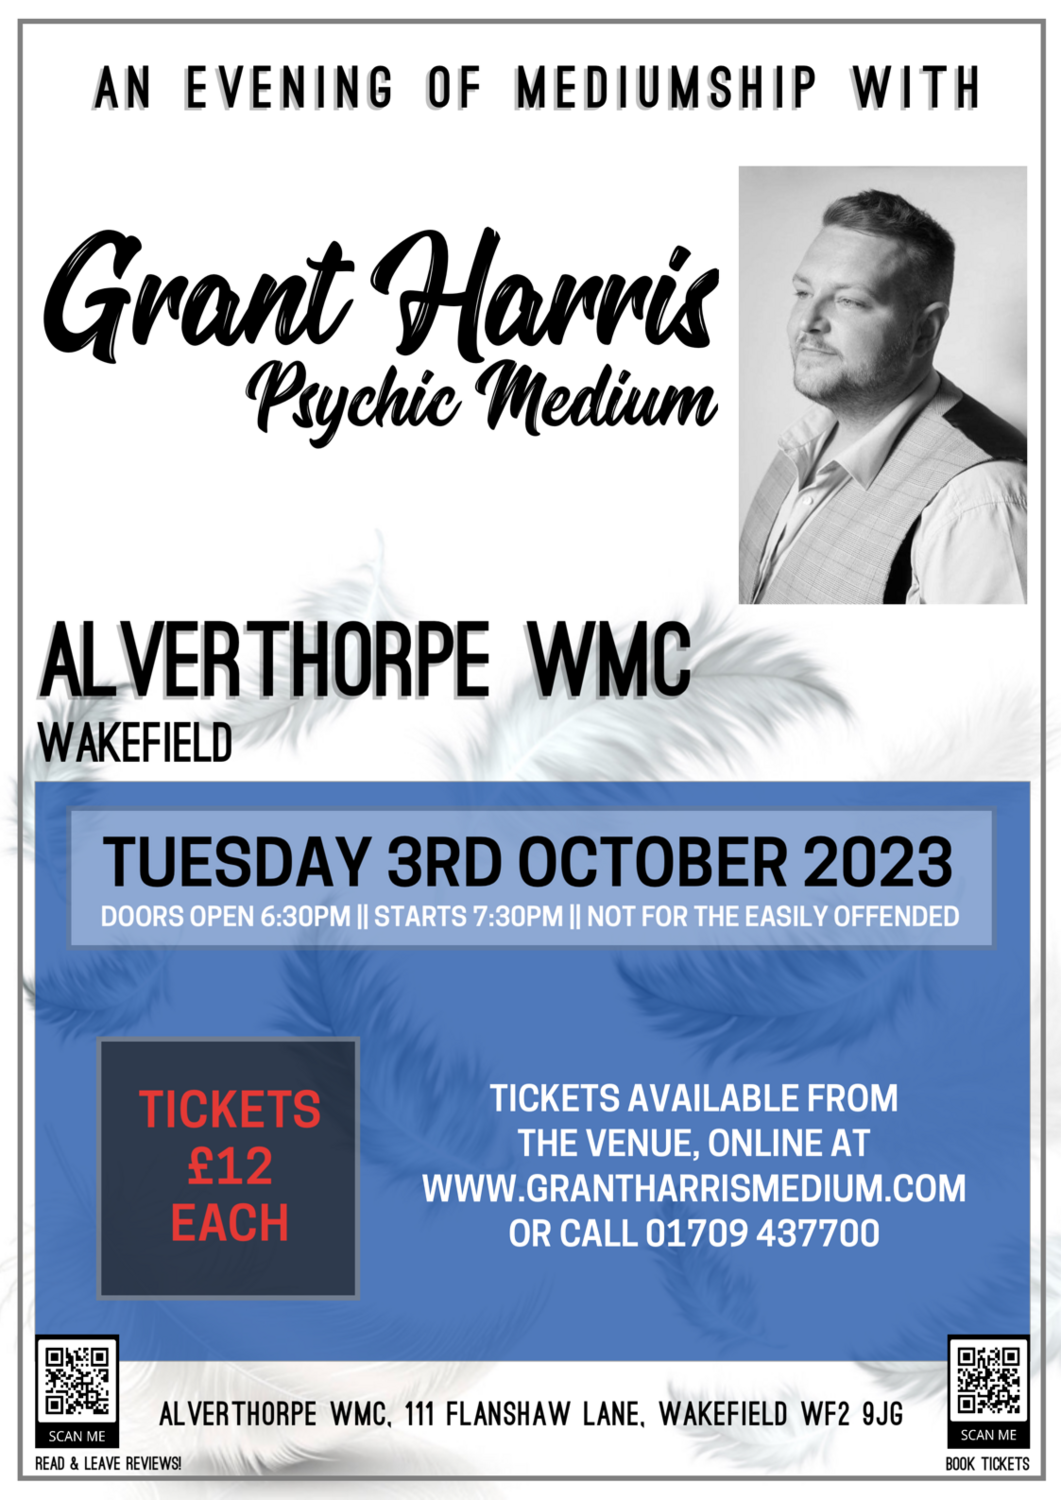 Alverthorpe WMC, Wakefield, Tuesday 3rd October 2023